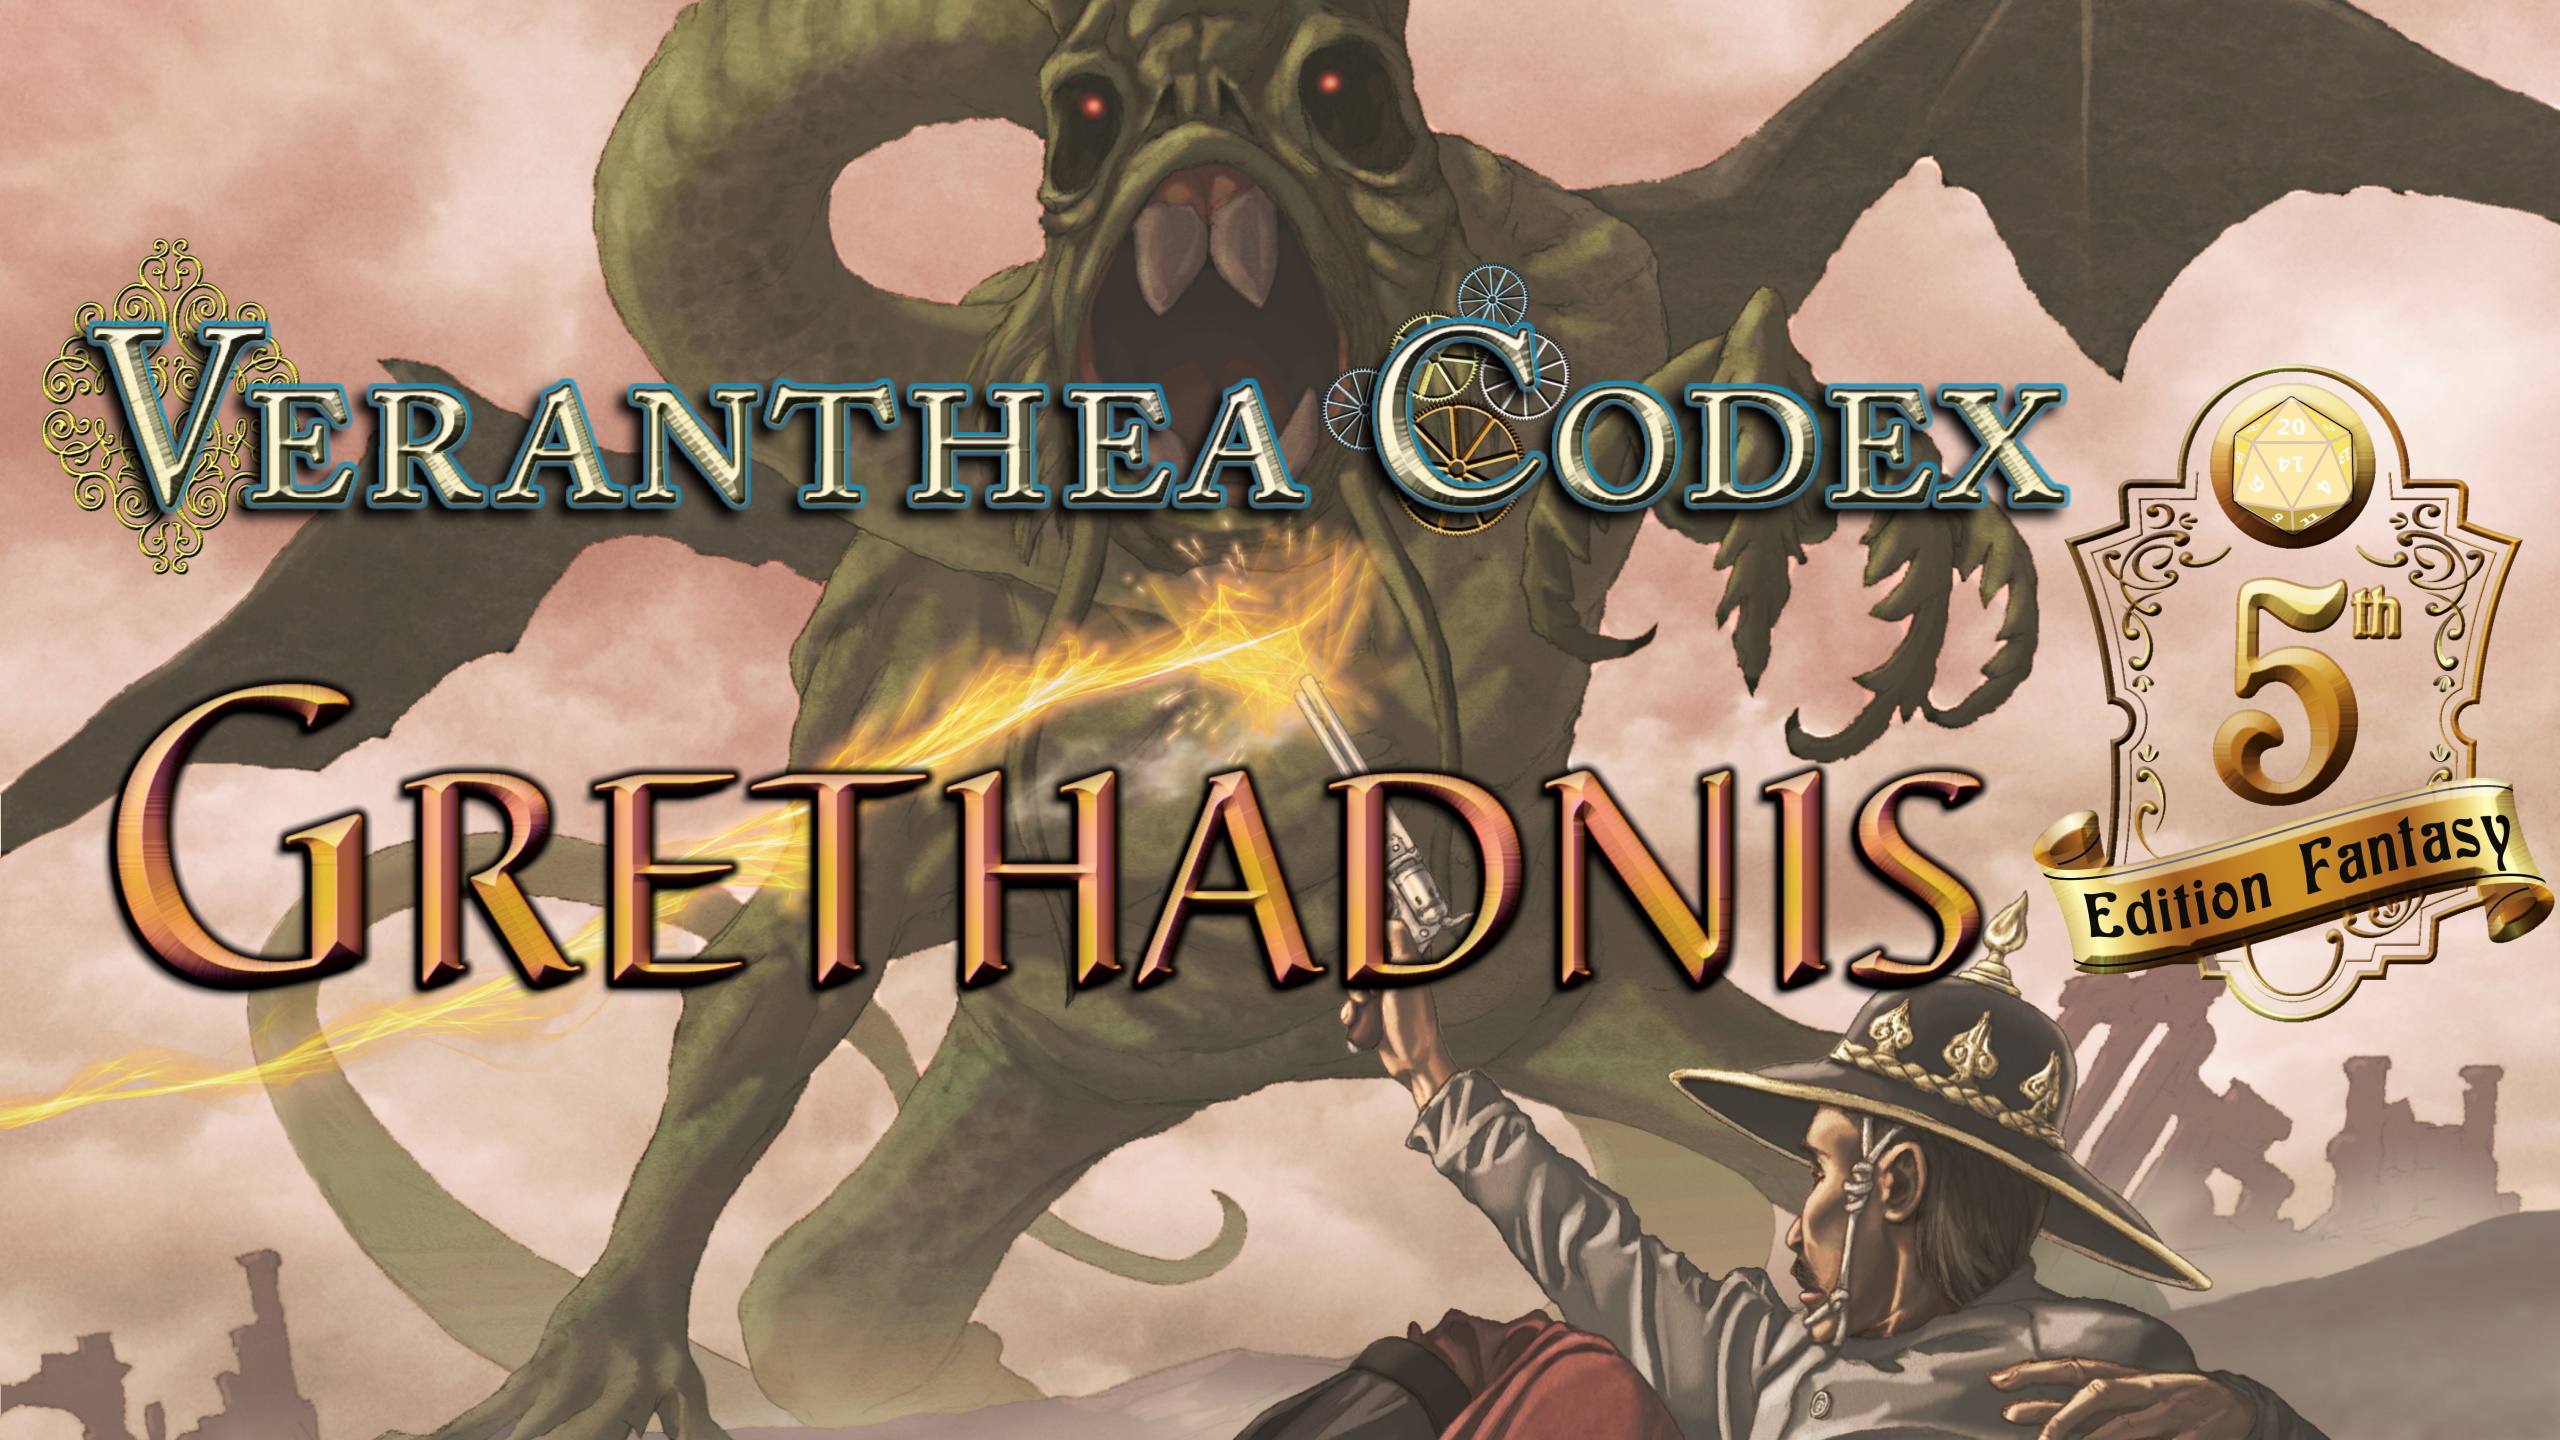 Veranthea Codex DnD 5E Grethadnis KS Banner.jpg